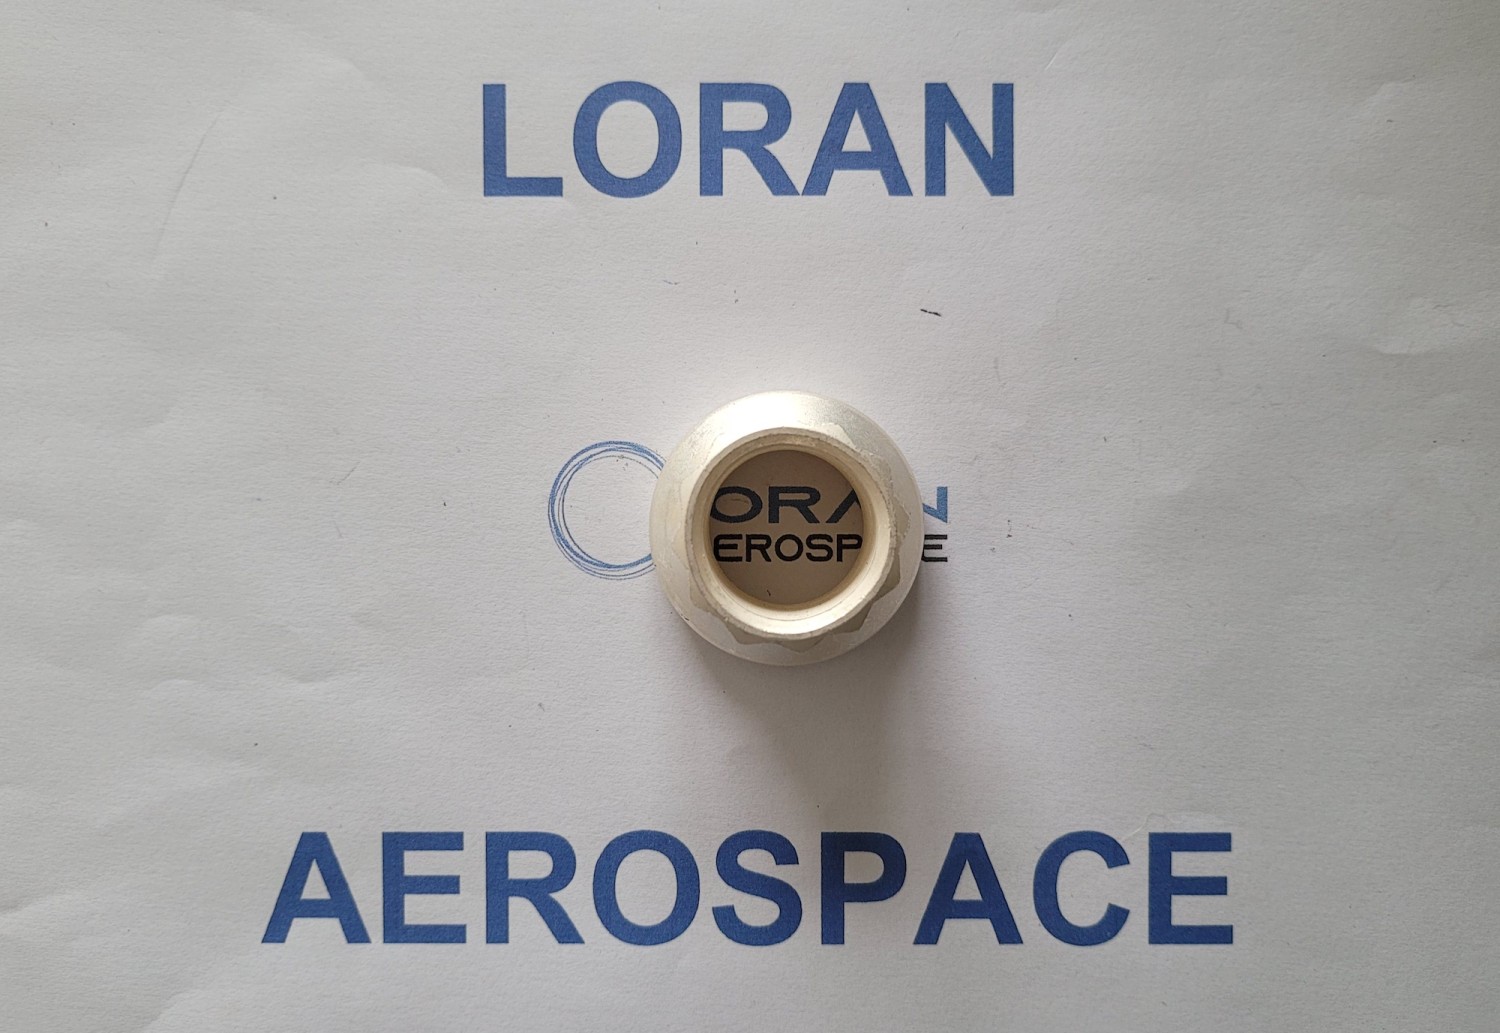 Loran Aerospace Online Shop Portal promo